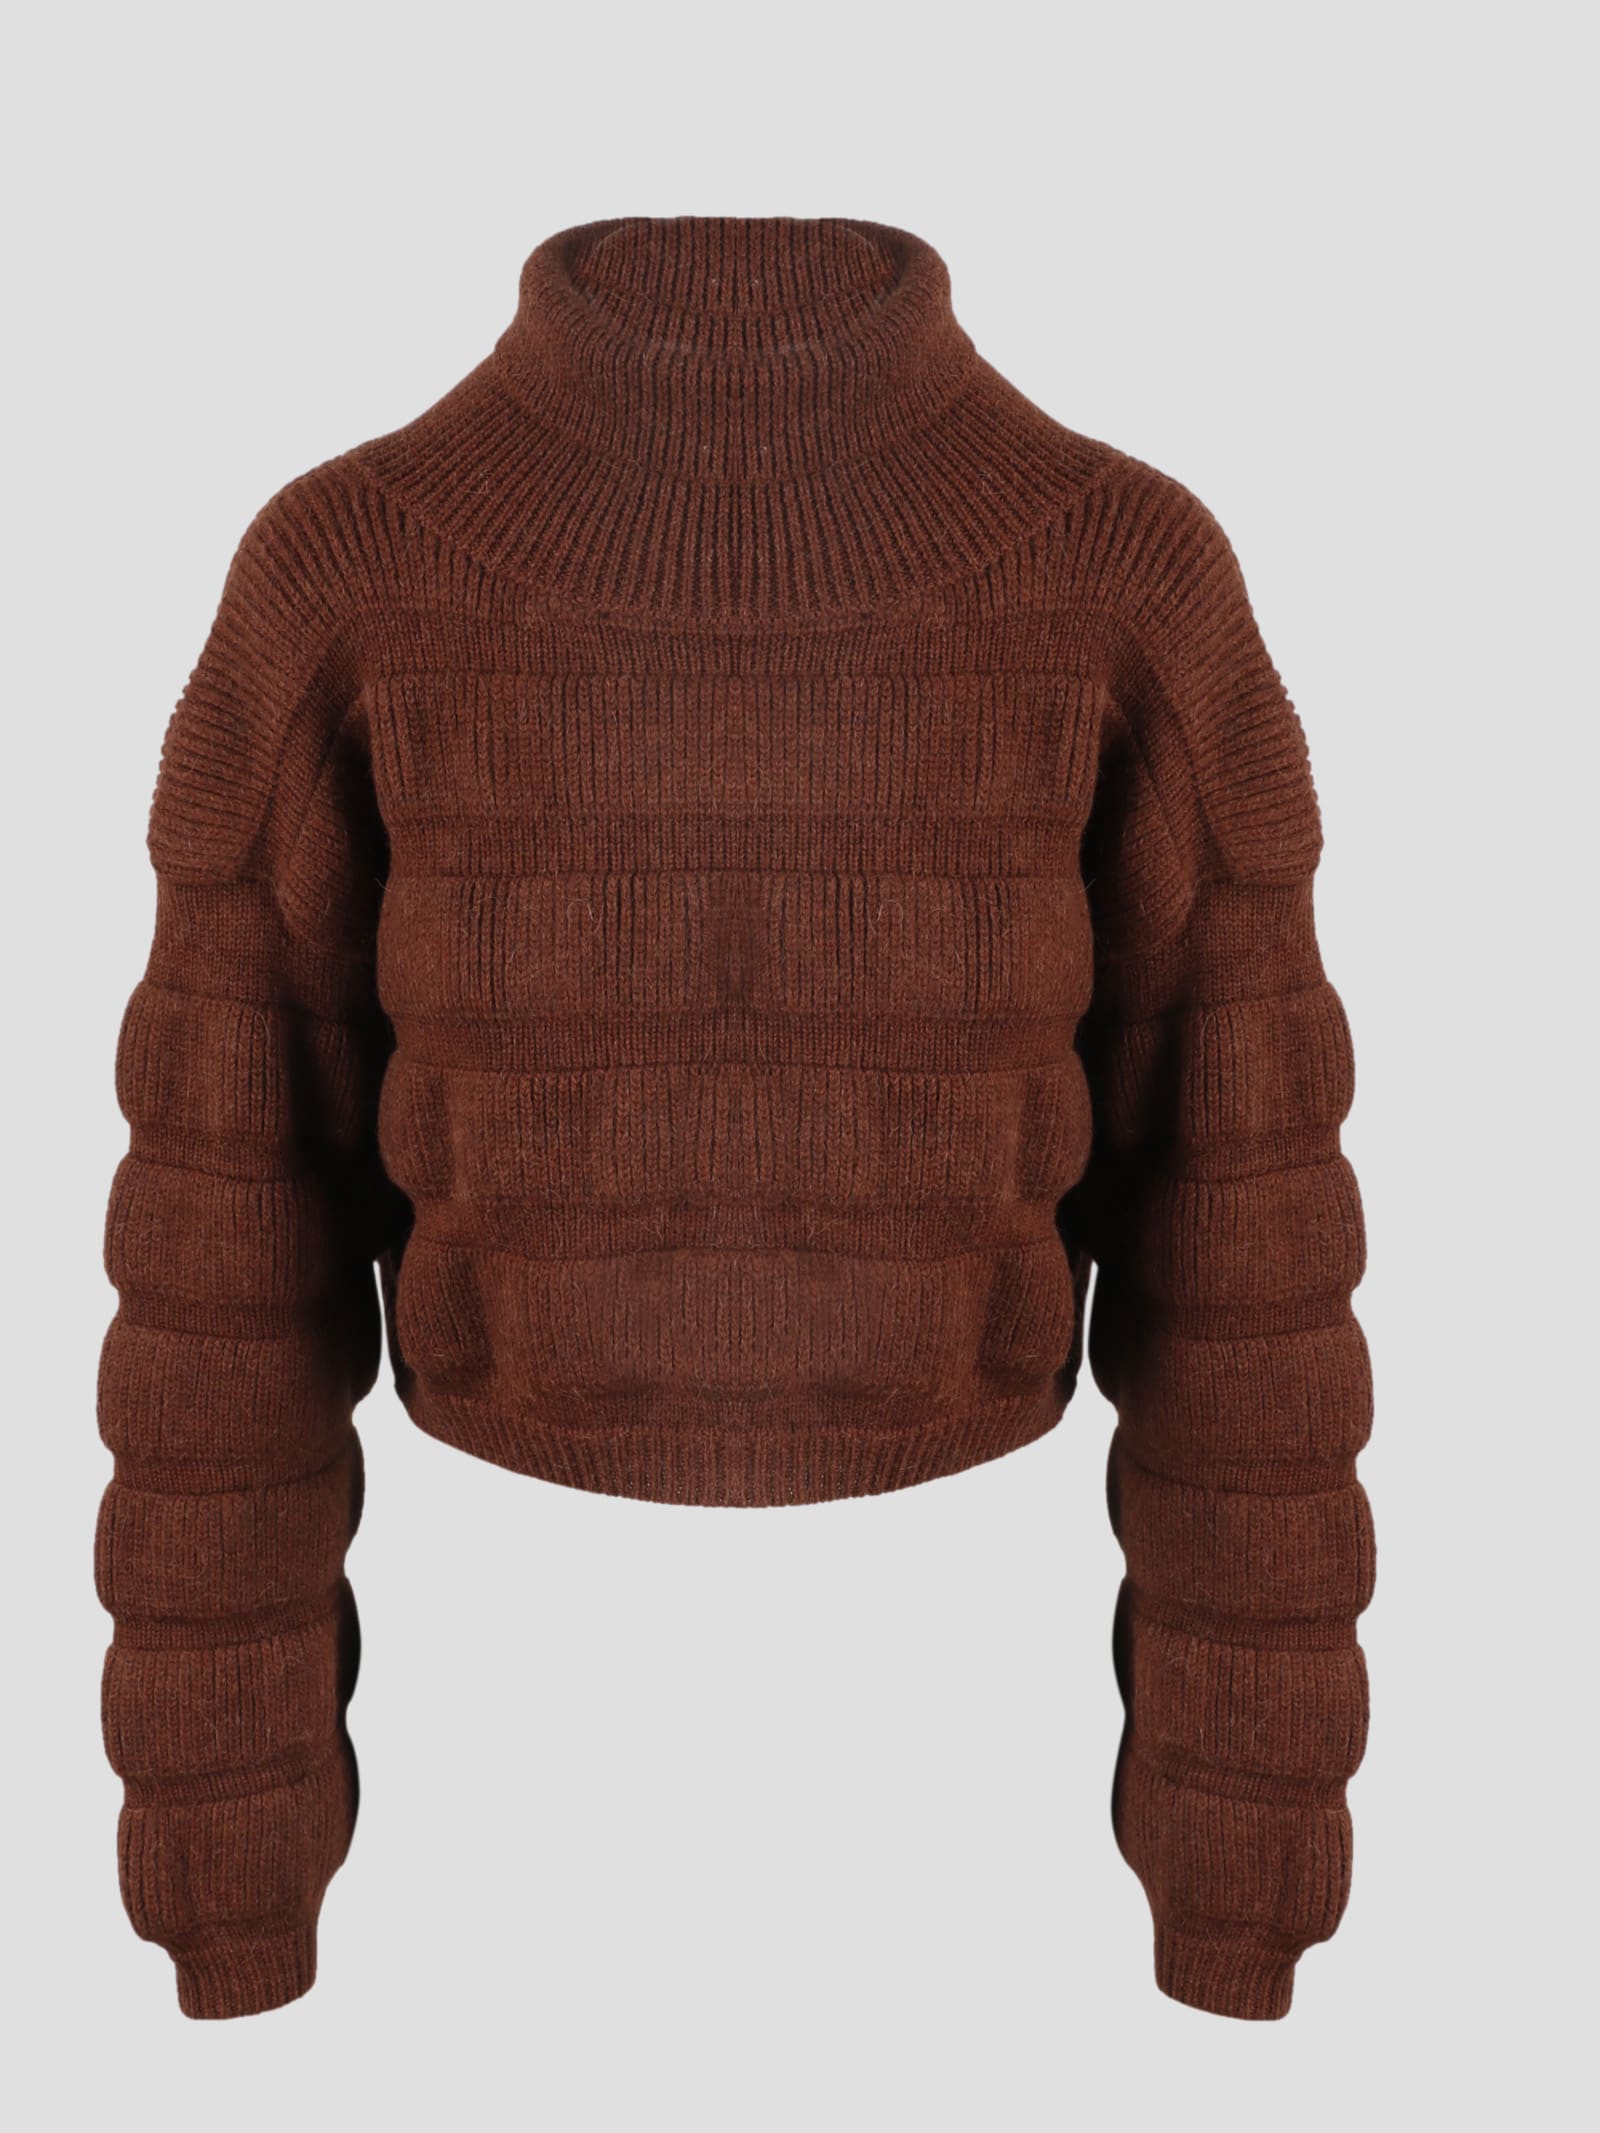 Saint Laurent Cropped Turtleneck Sweater